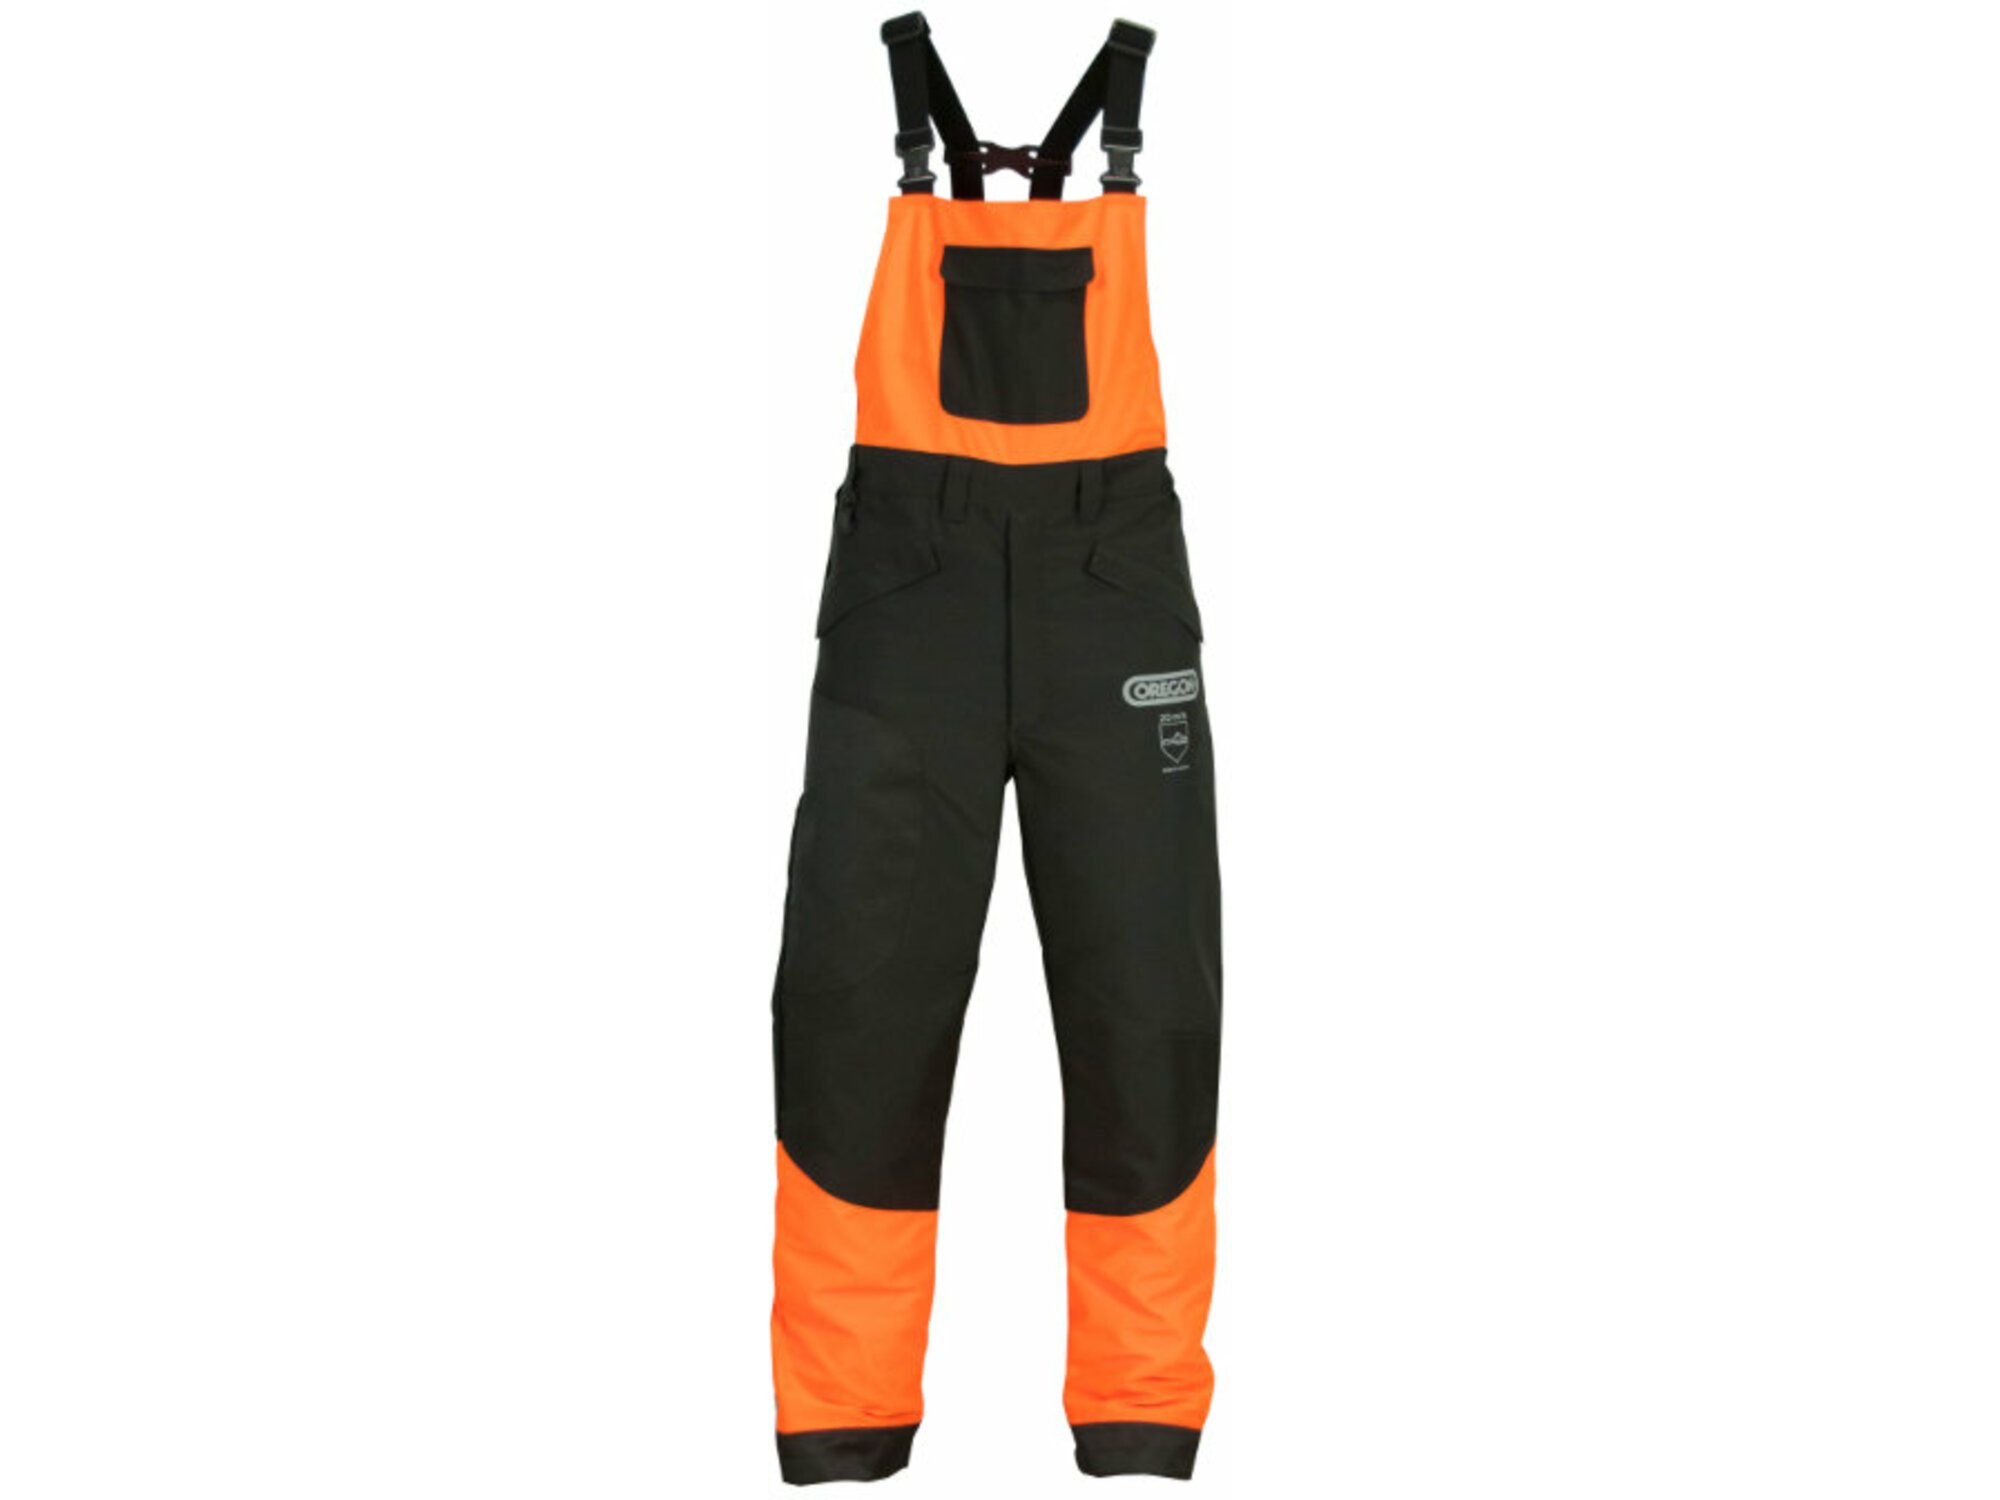 OREGON zaščitne hlače z naramnicami WAIPOUA št.54/56(XL) OR 295464/XL